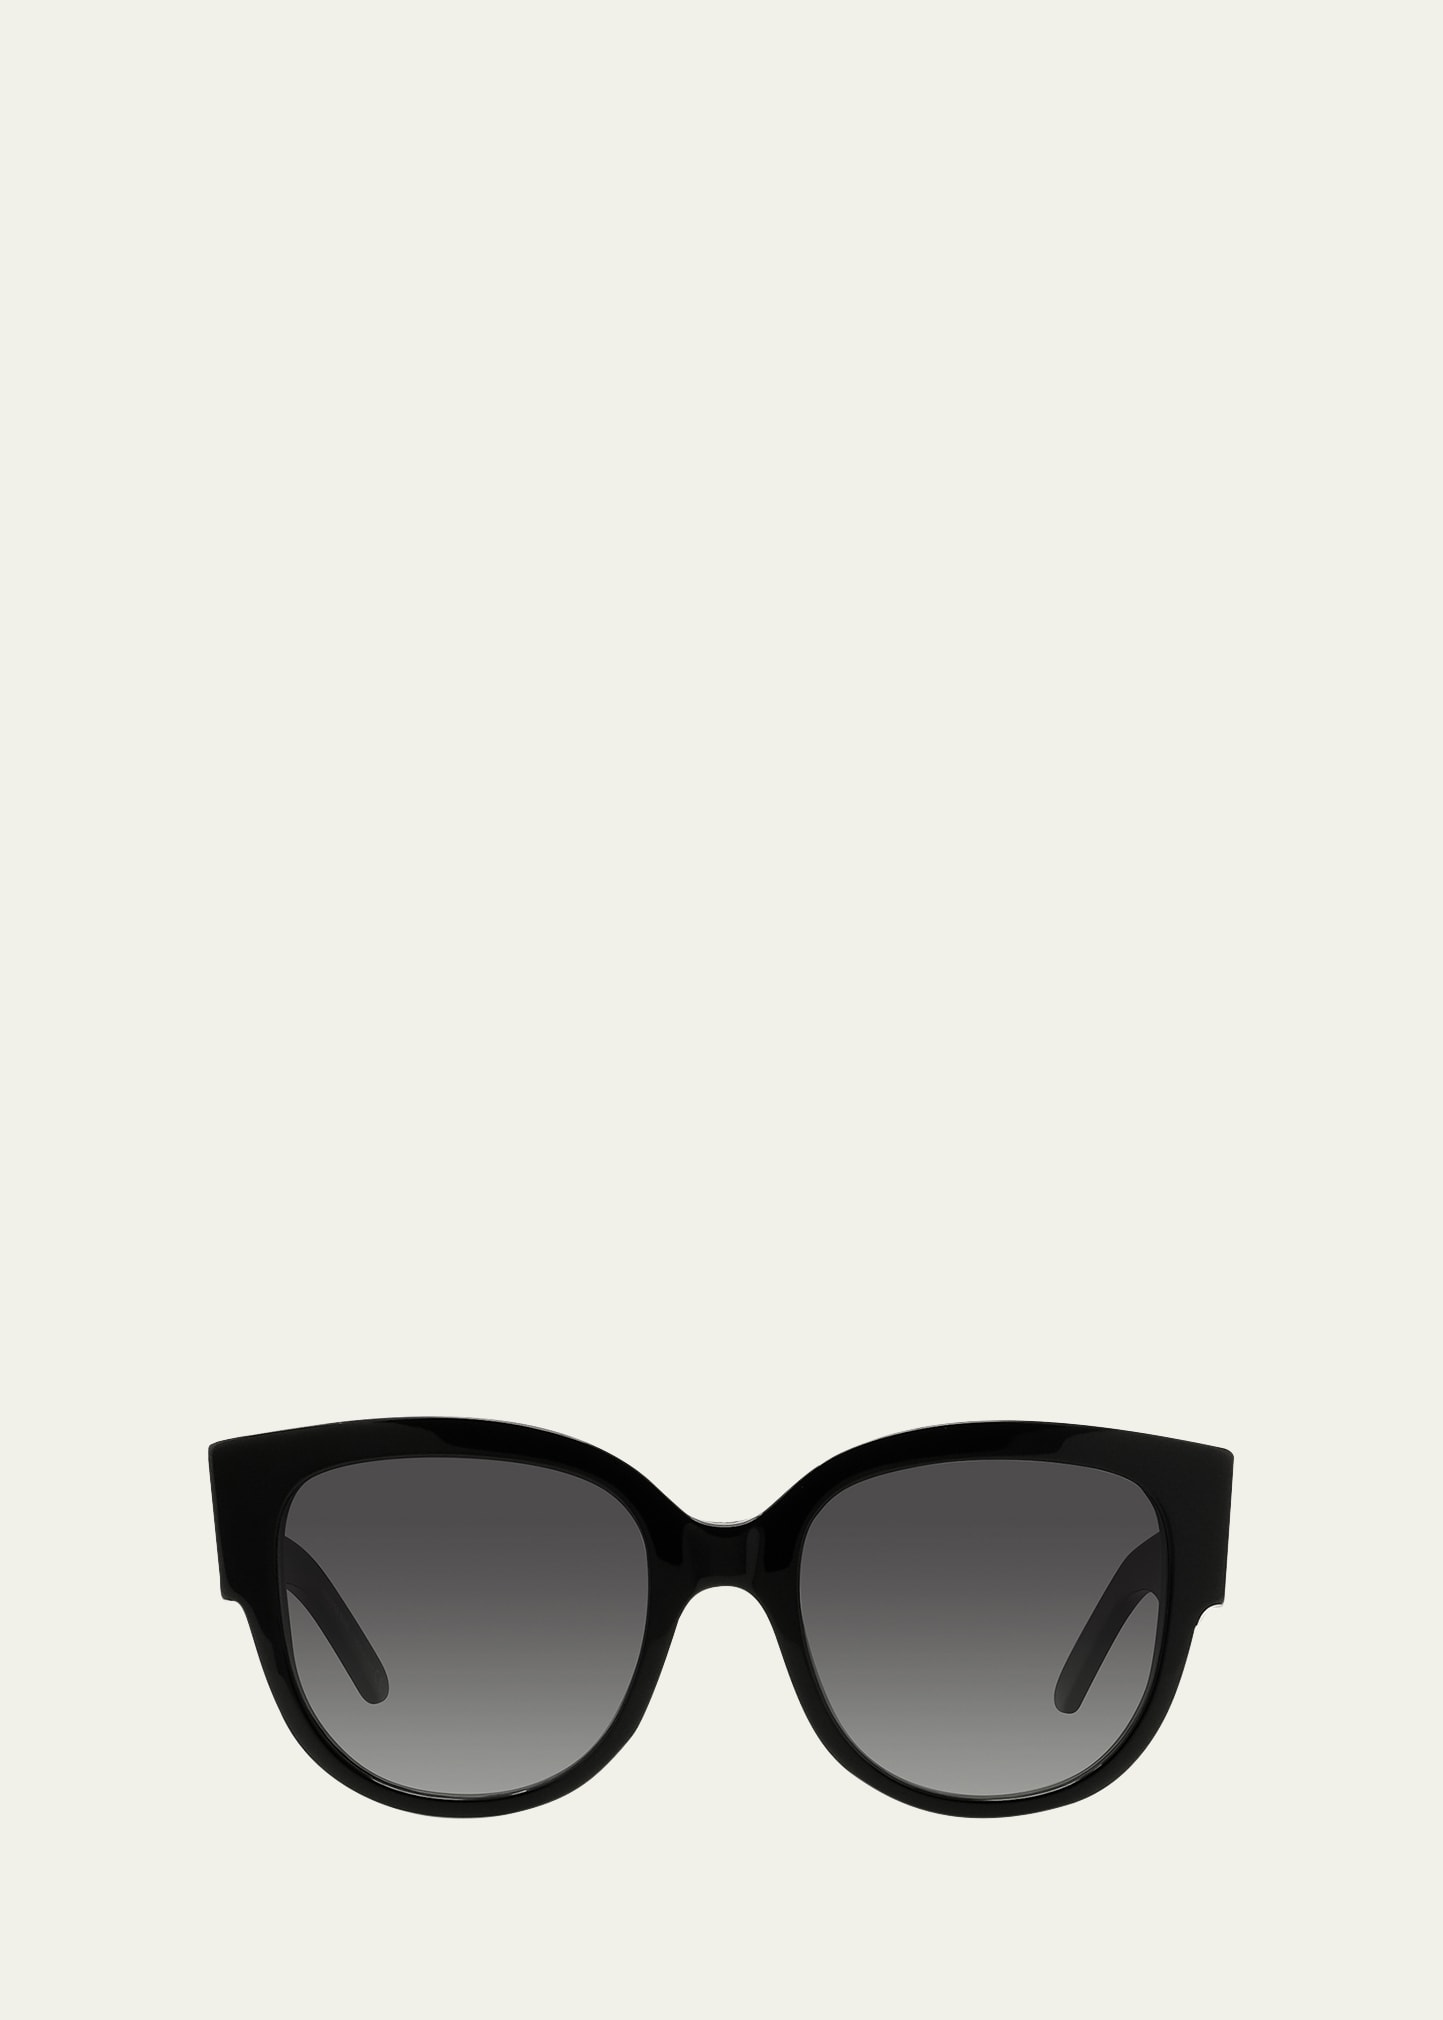 Wildior BU Sunglasses